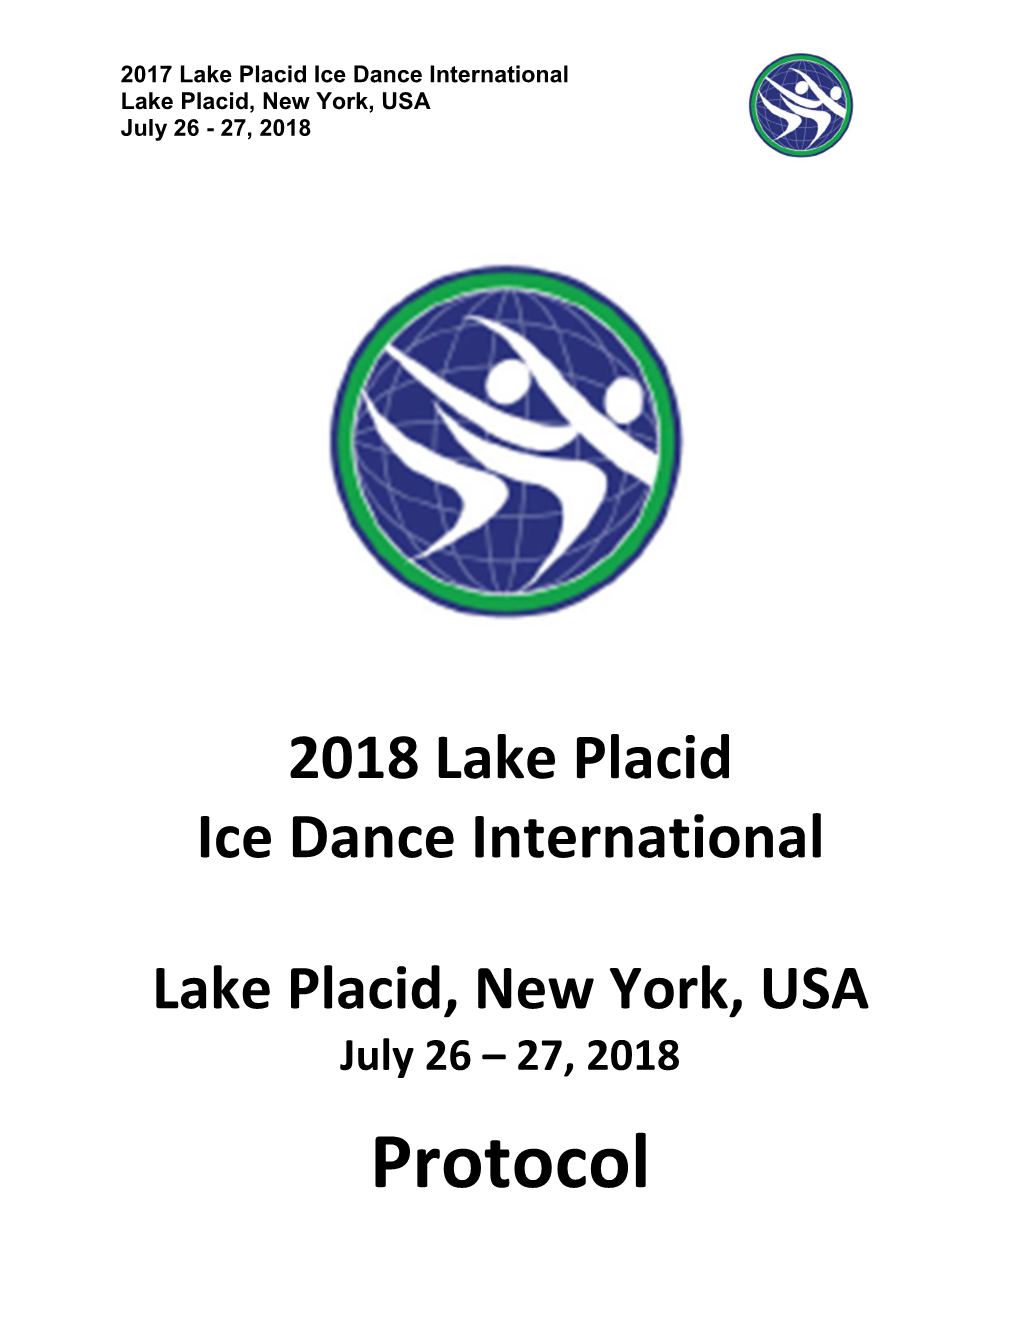 2018 Lake Placid Ice Dance International